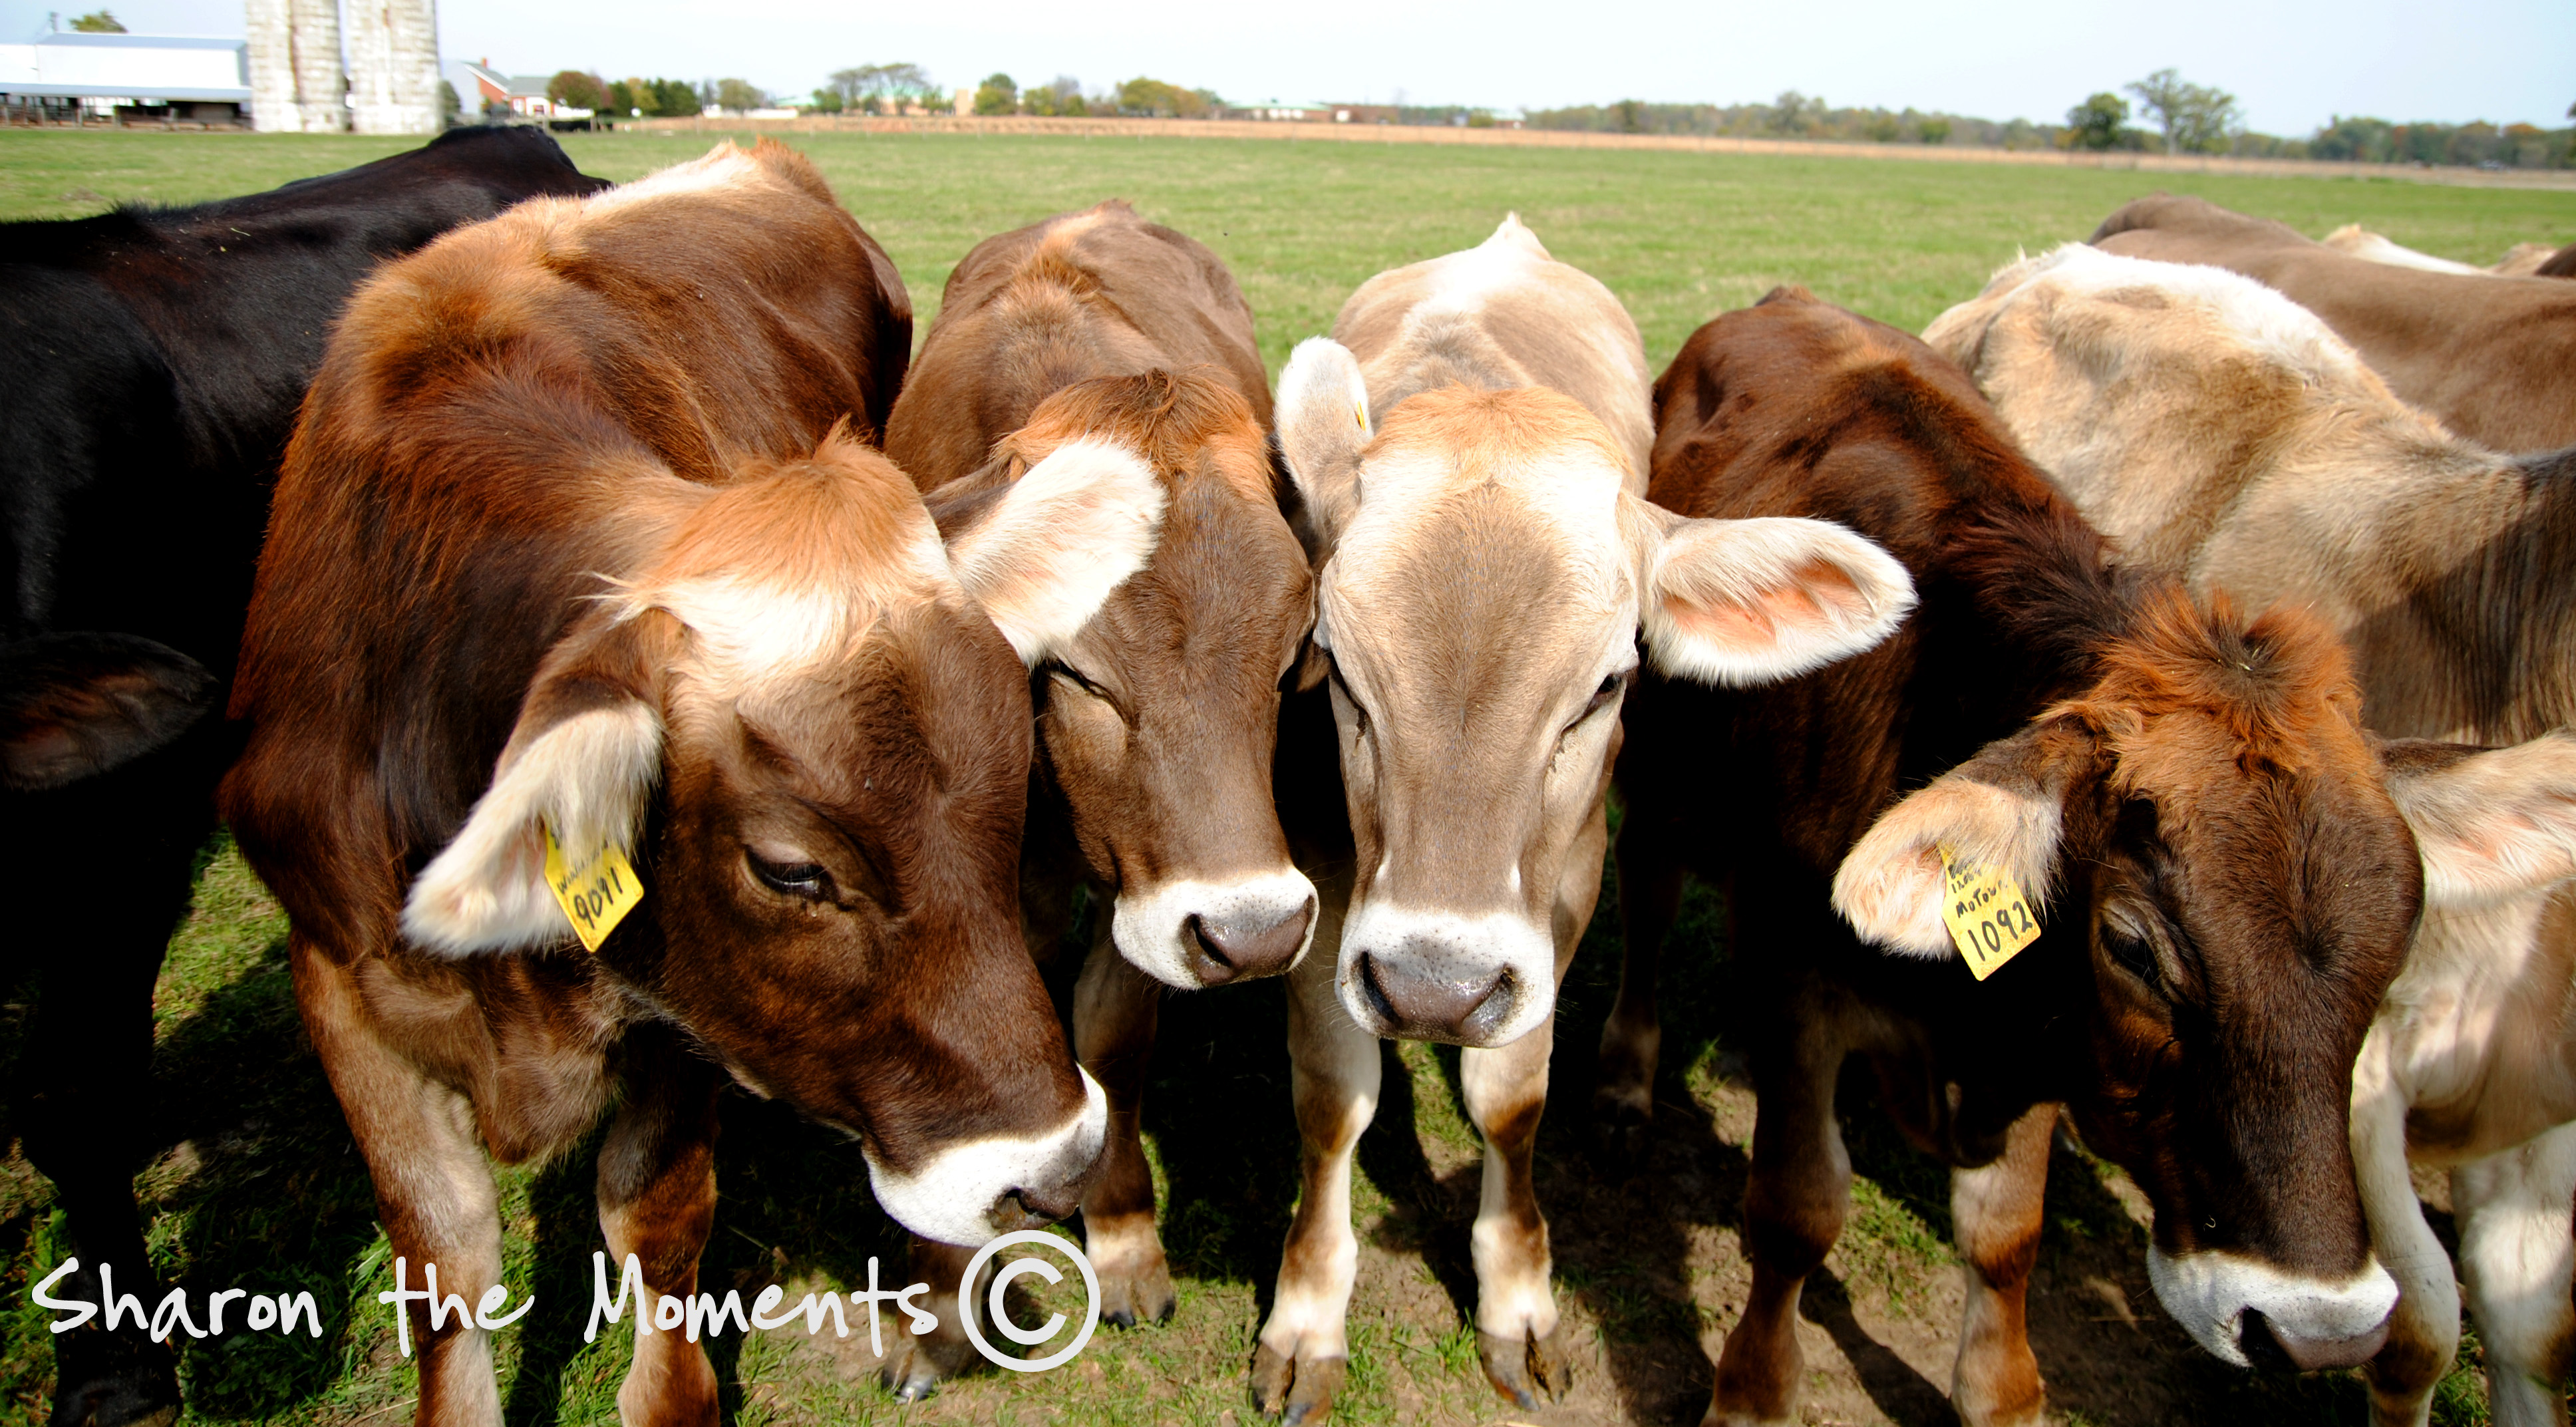 Cows at Orchard and company|Sharon the Moments blog